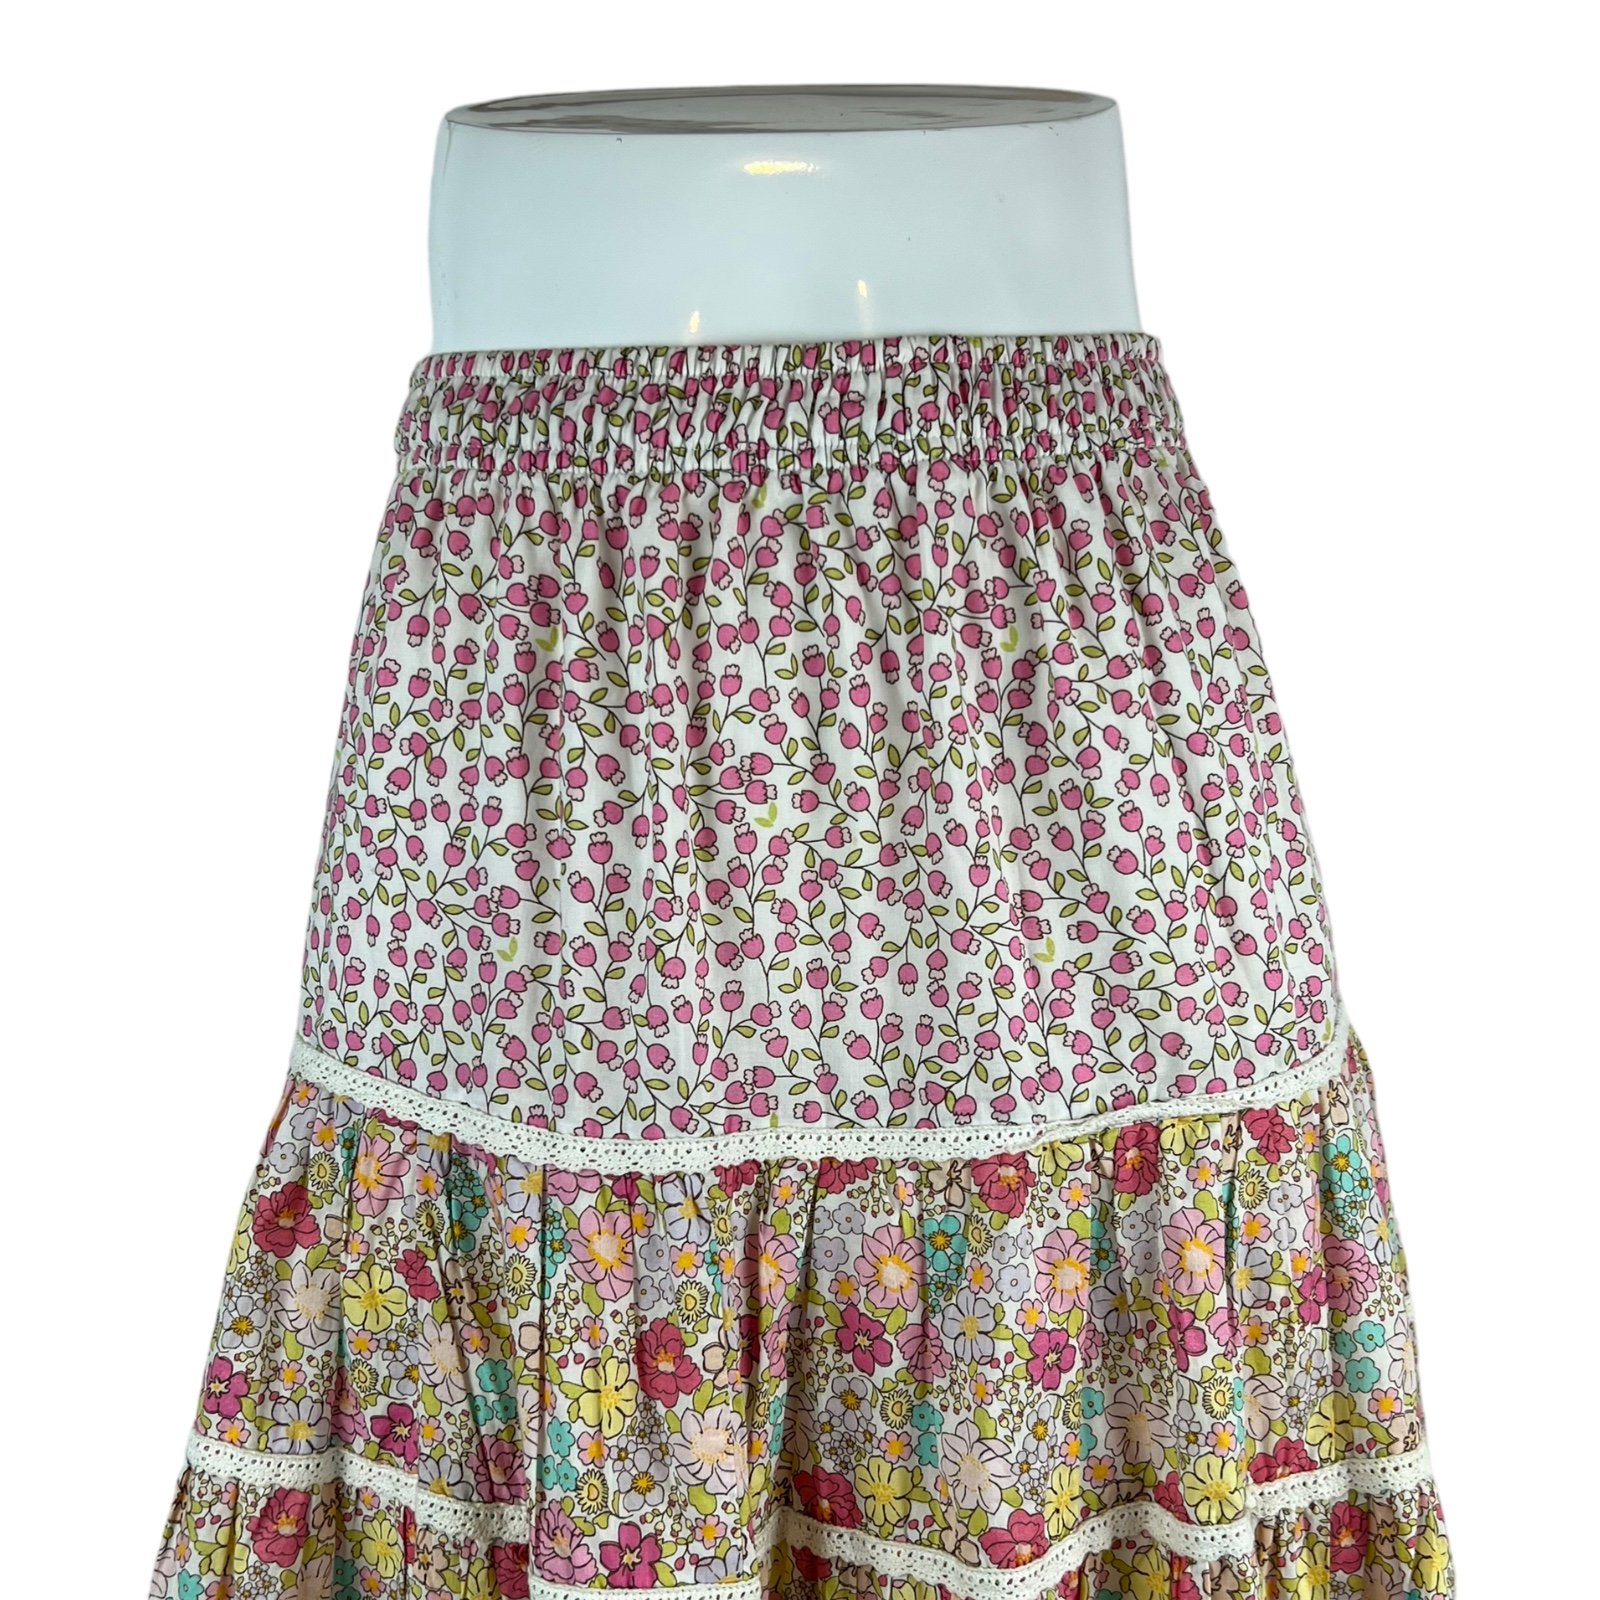 Popular Jasika Ruffle Maxi Skirt Tiered Floral Elastic Waist Fairy Boho Cottage Sz 32 prfNEFx7i Online Shop